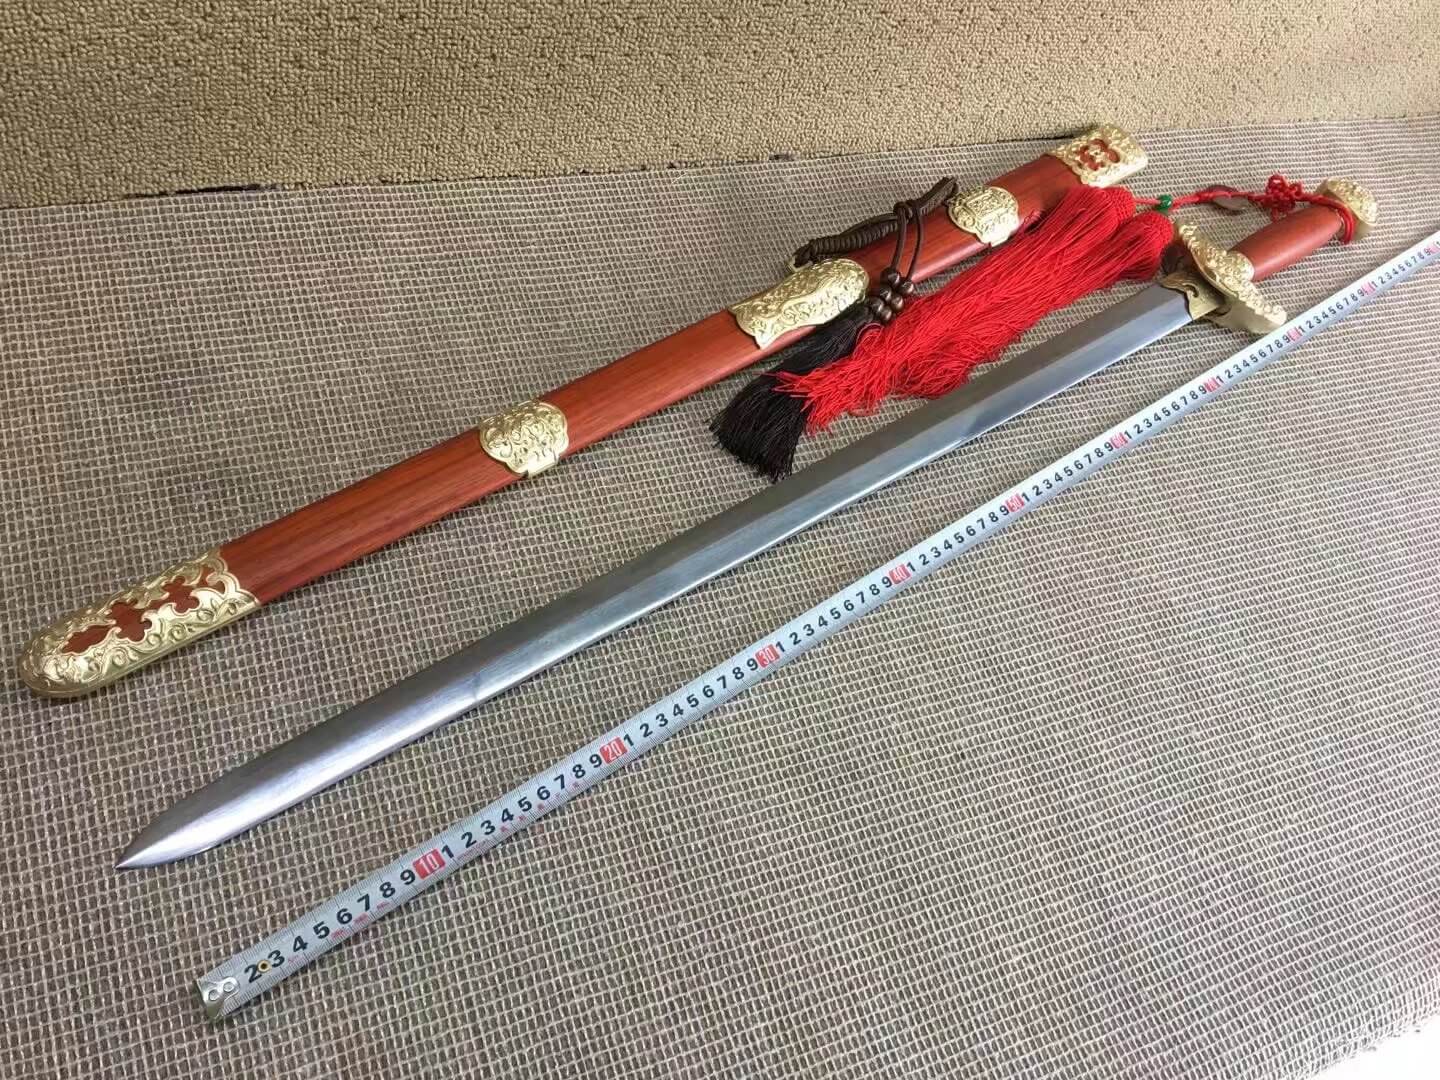 Qianlong sword,Pattern steel blade,Red scabbard,Brass fittings - Chinese sword shop